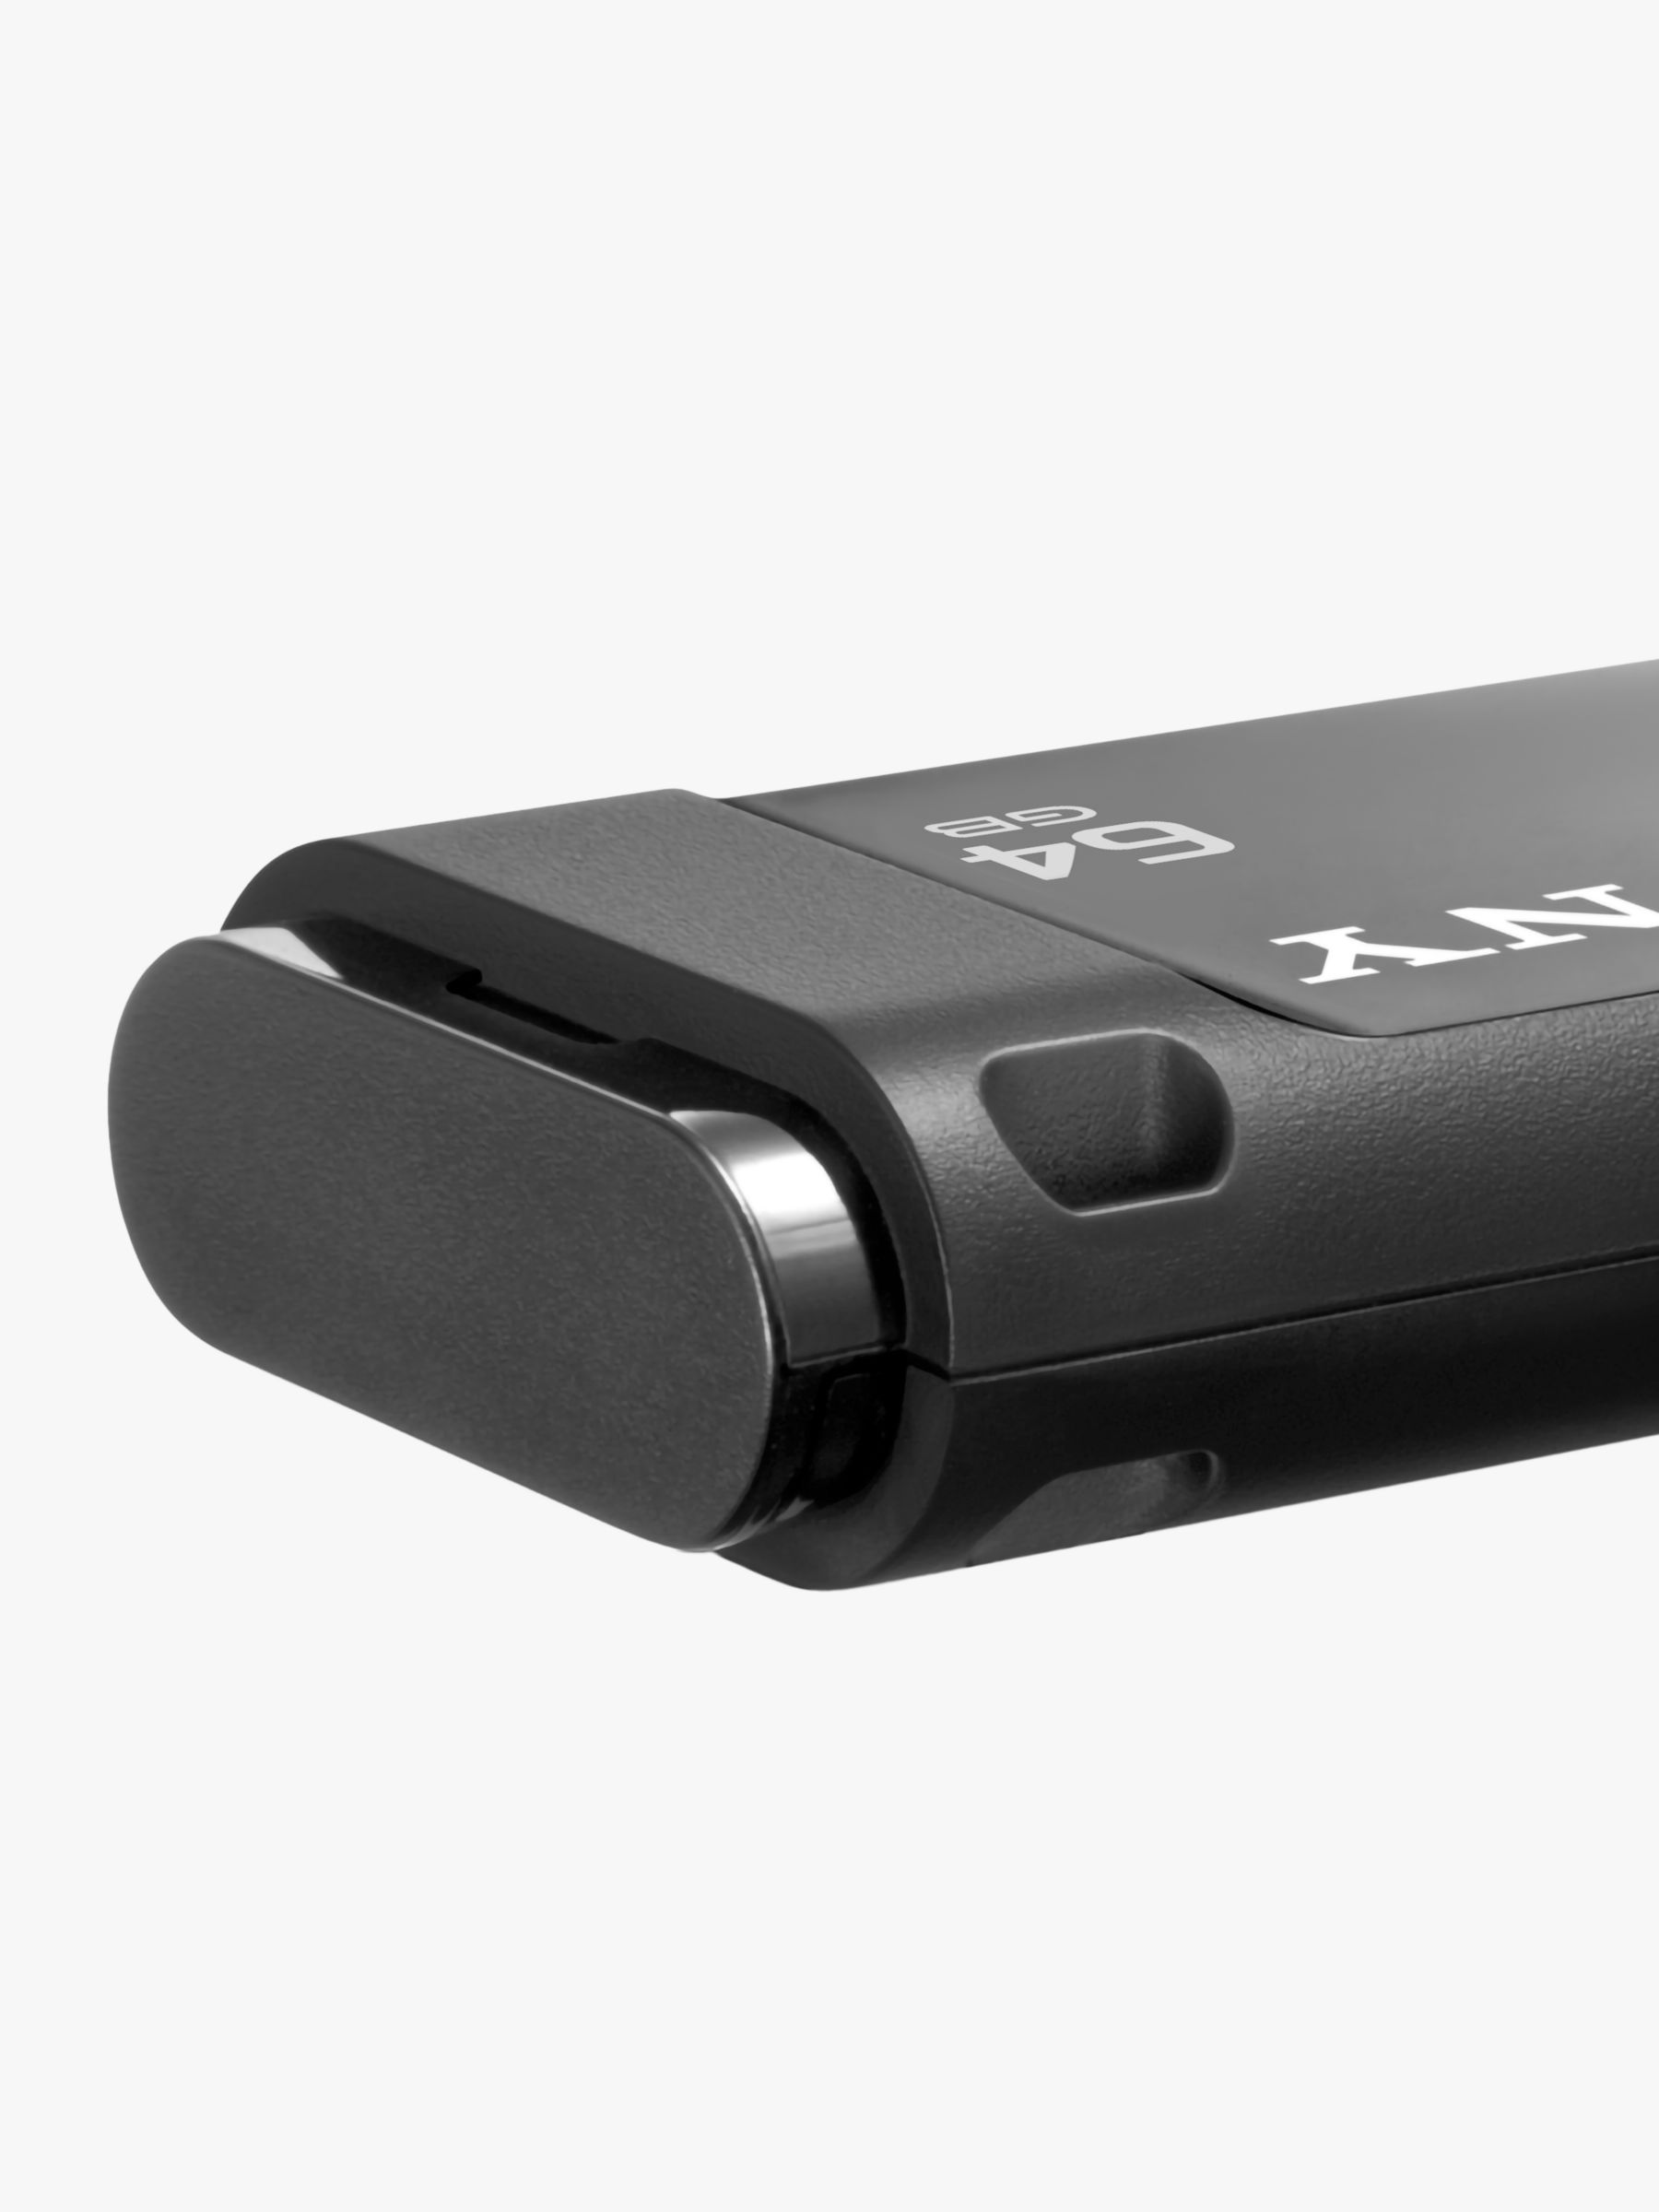 Sony Portable Usb Flash Storage Drive Black 64gb At John Lewis And Partners